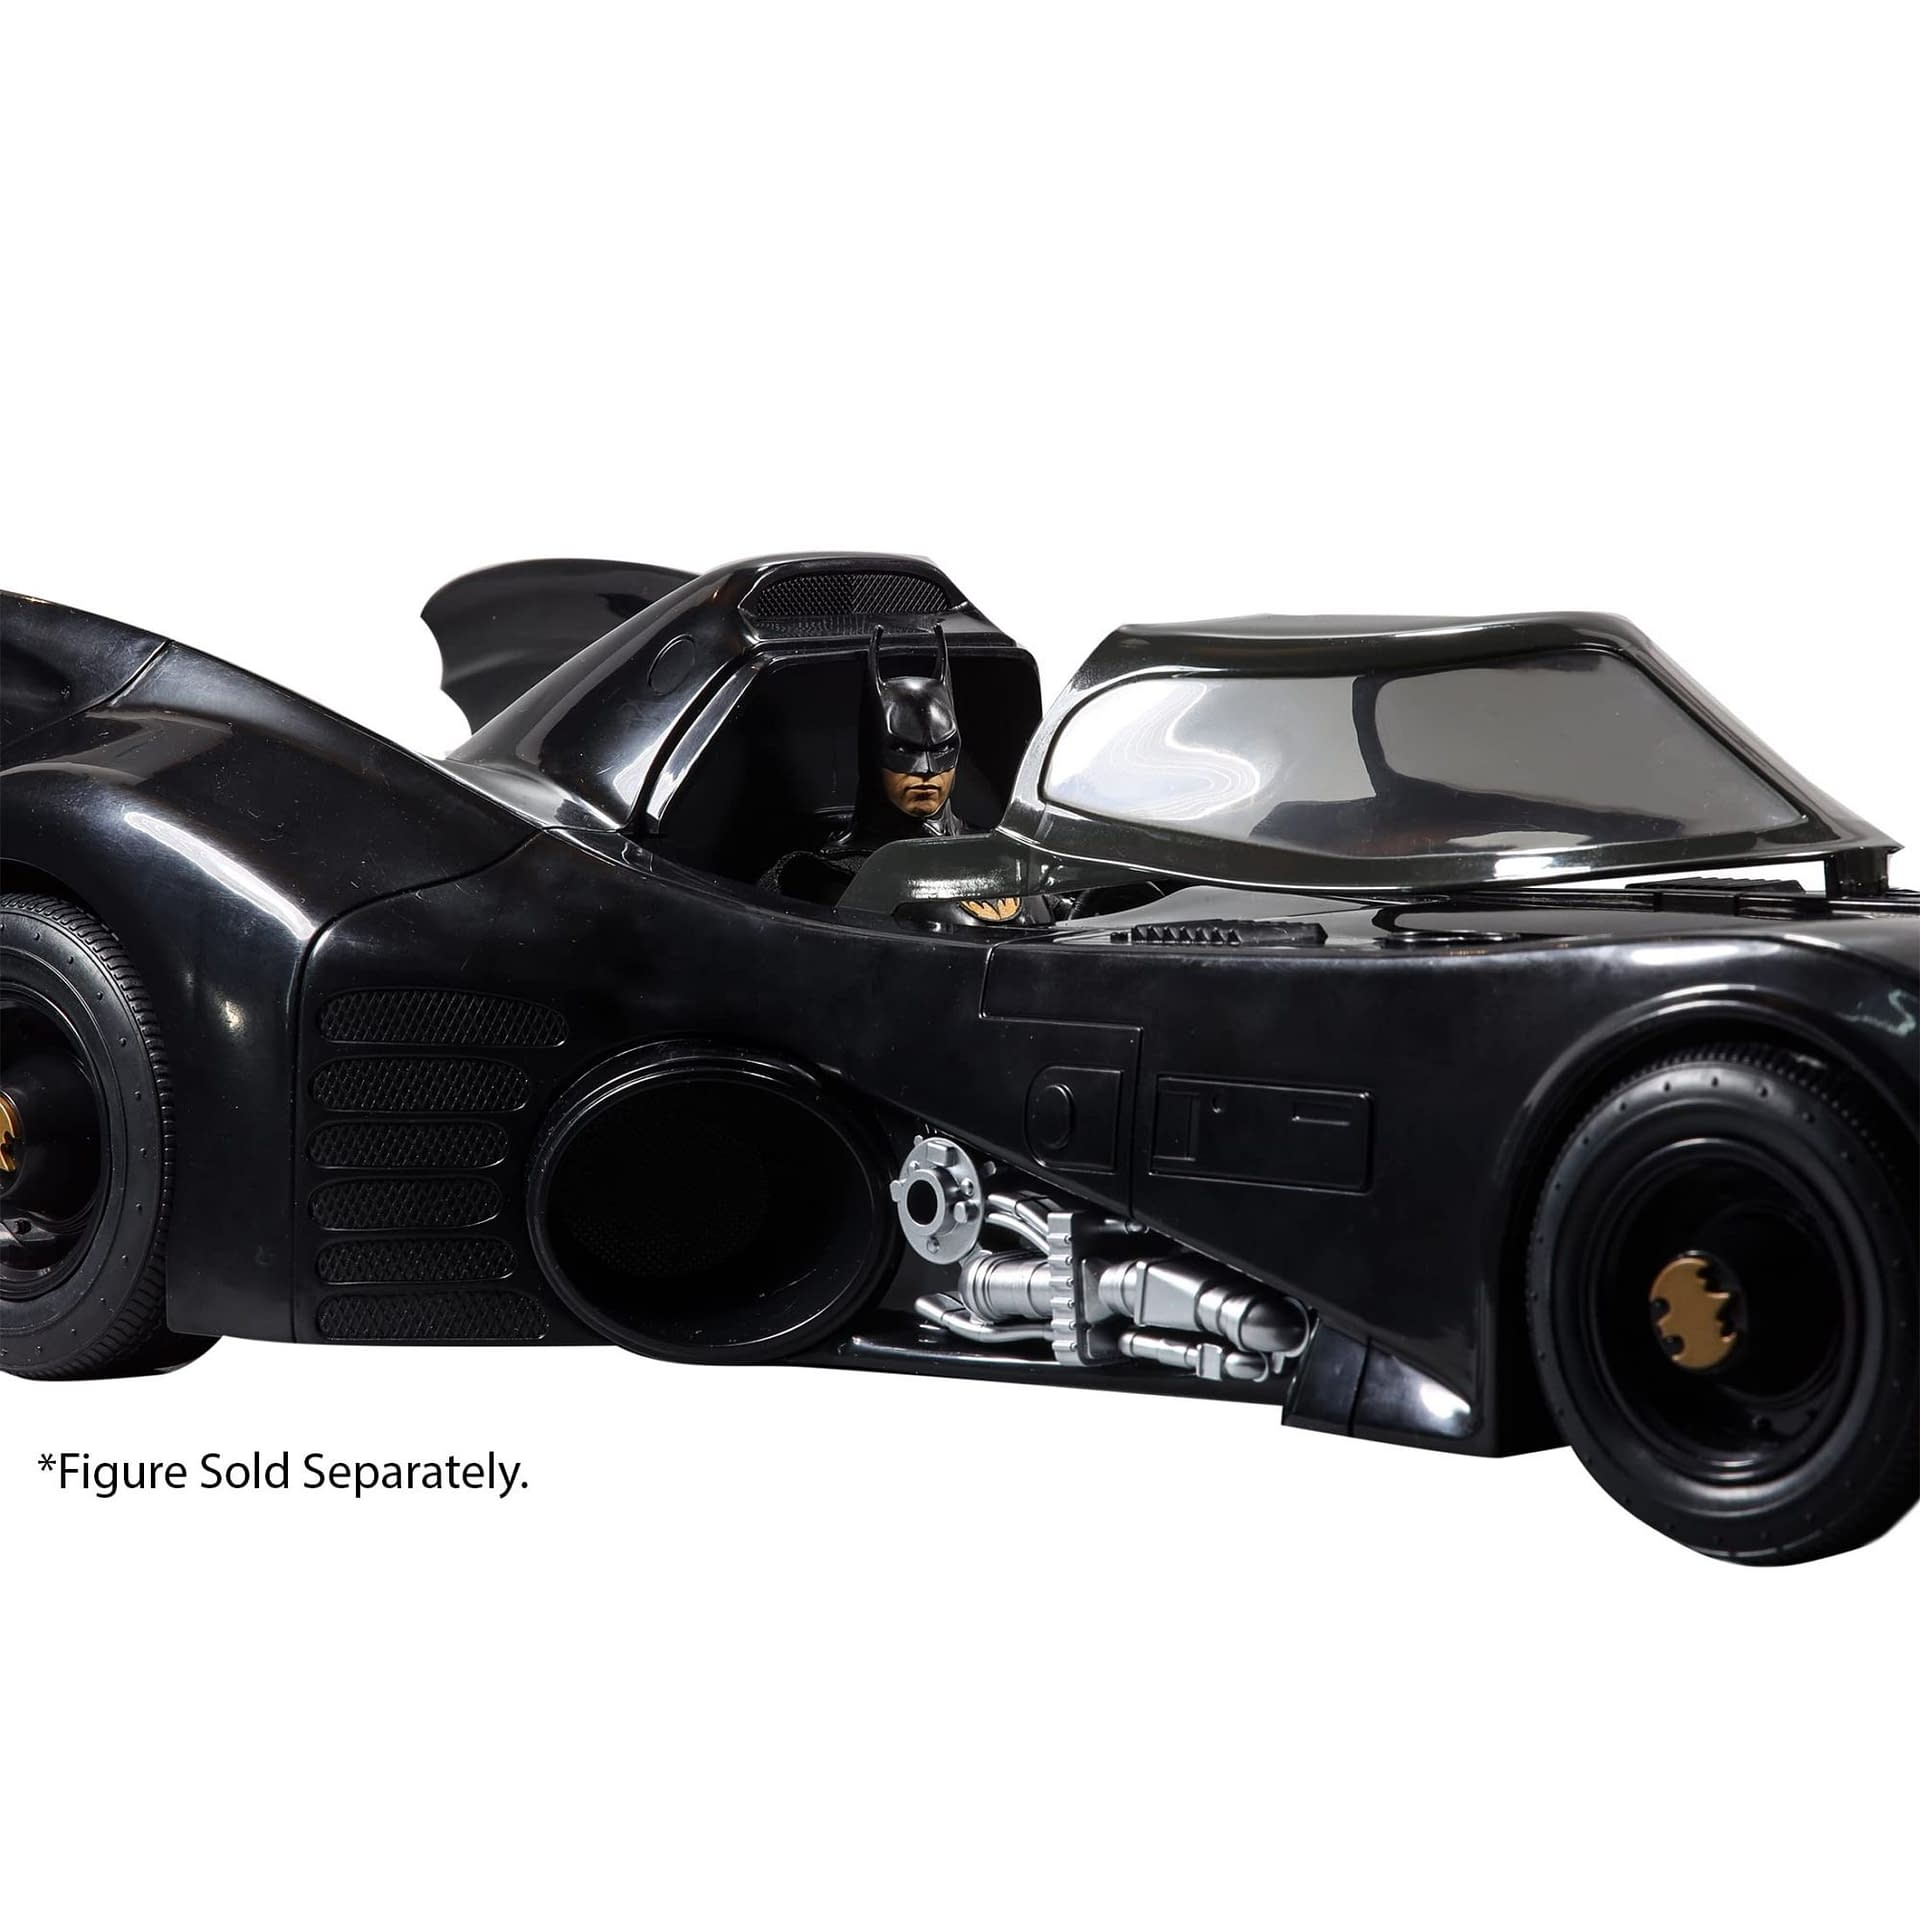 Pre-Orders Arrive for McFarlane Toys New The Batman 89 Batmobile